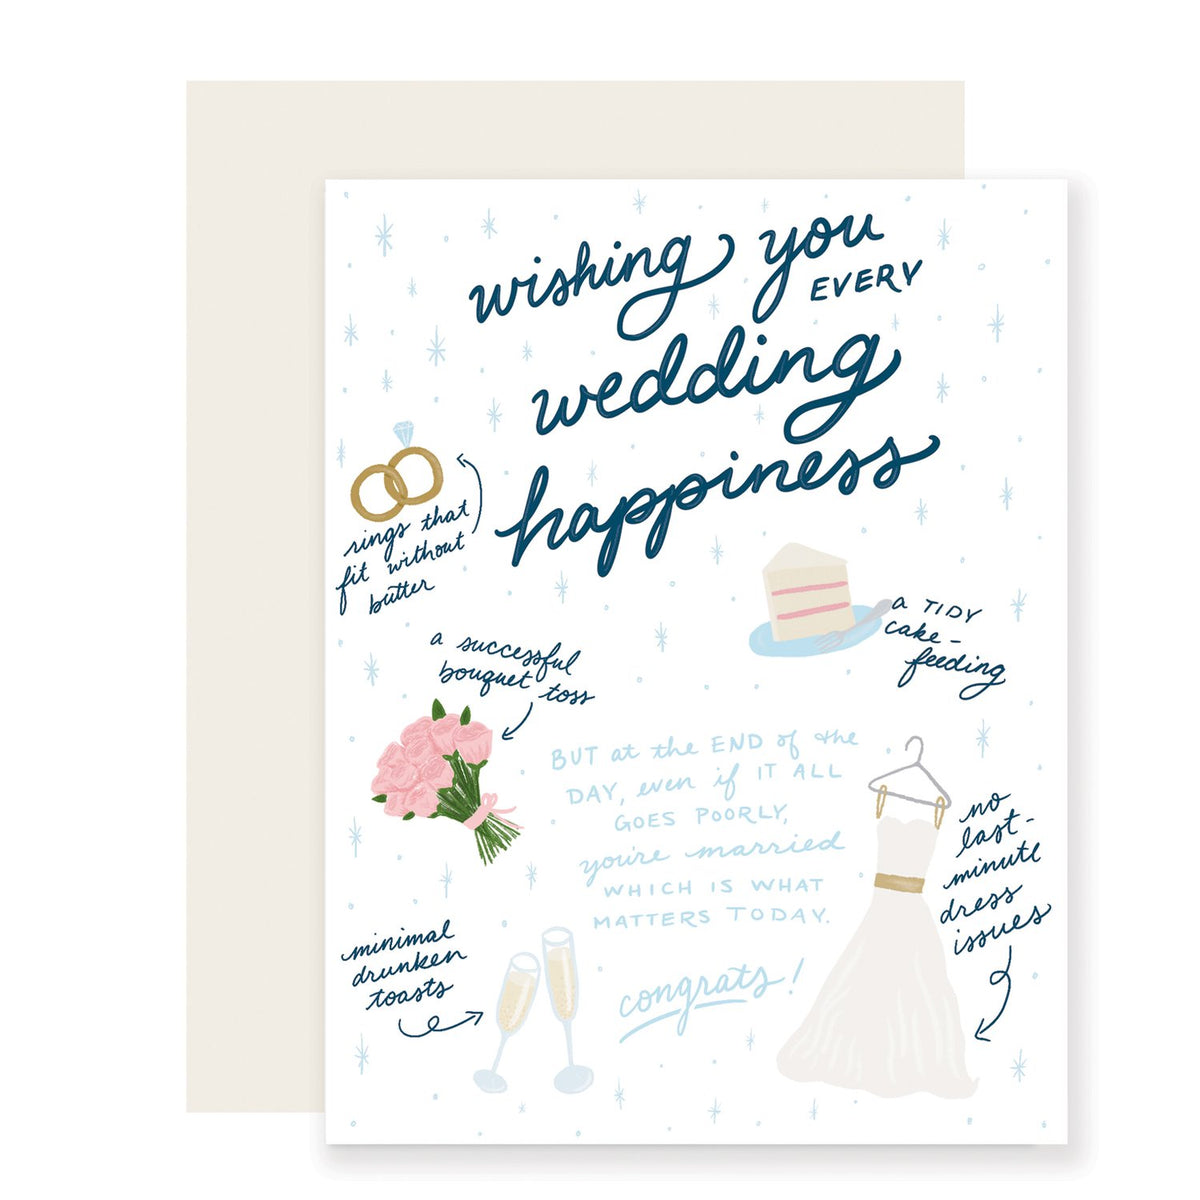 Every Happiness Wedding Card